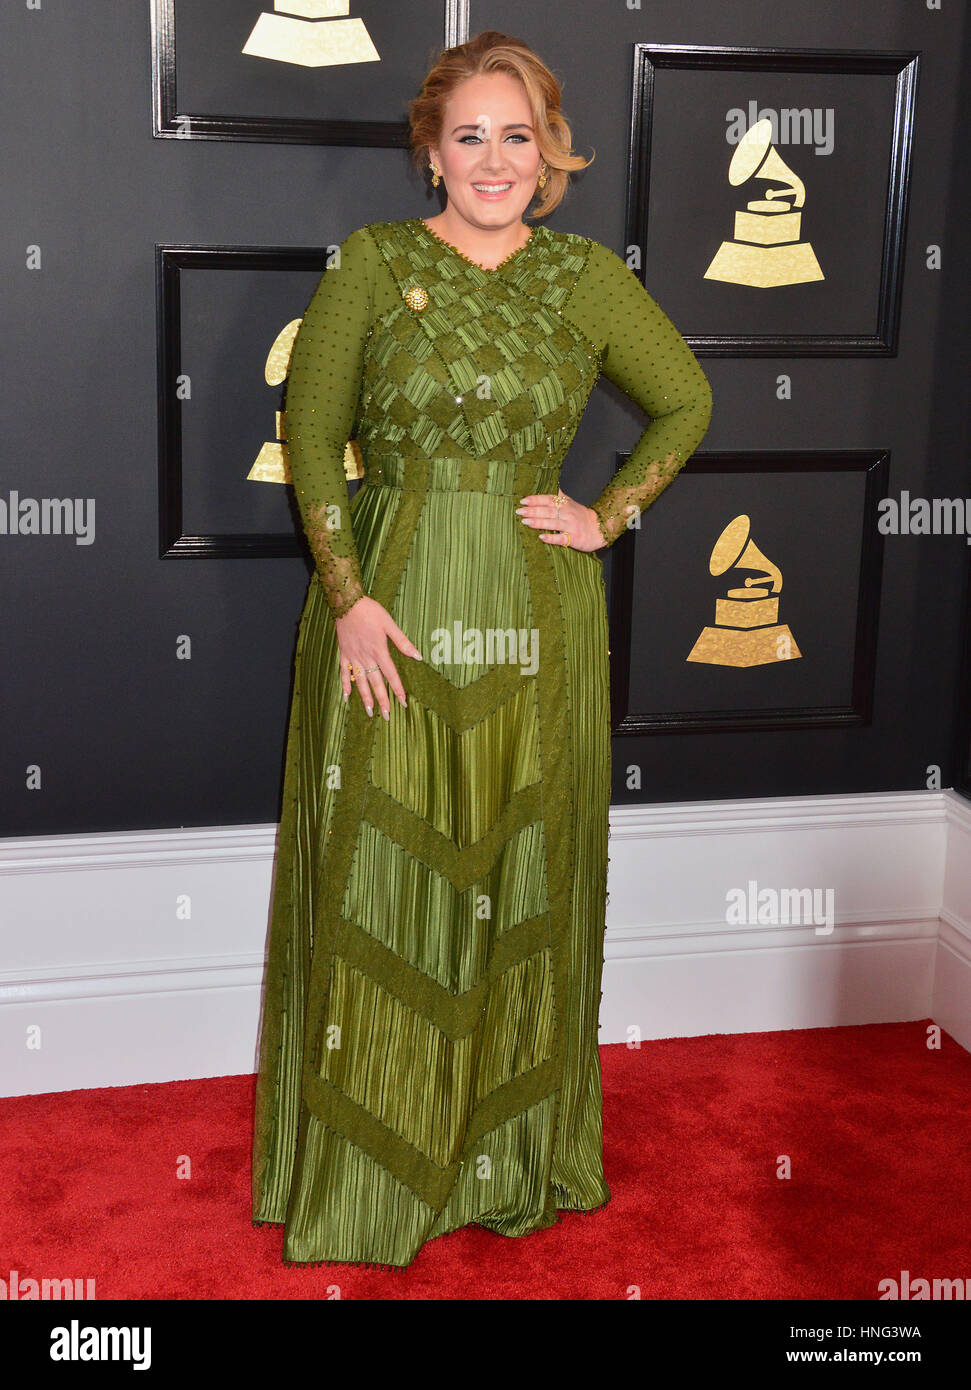 Adele 076 arrivando a 59th Annual Grammy Awards 2017 a Staples Center di Los Angeles. Febbraio 12, 2017. Foto Stock